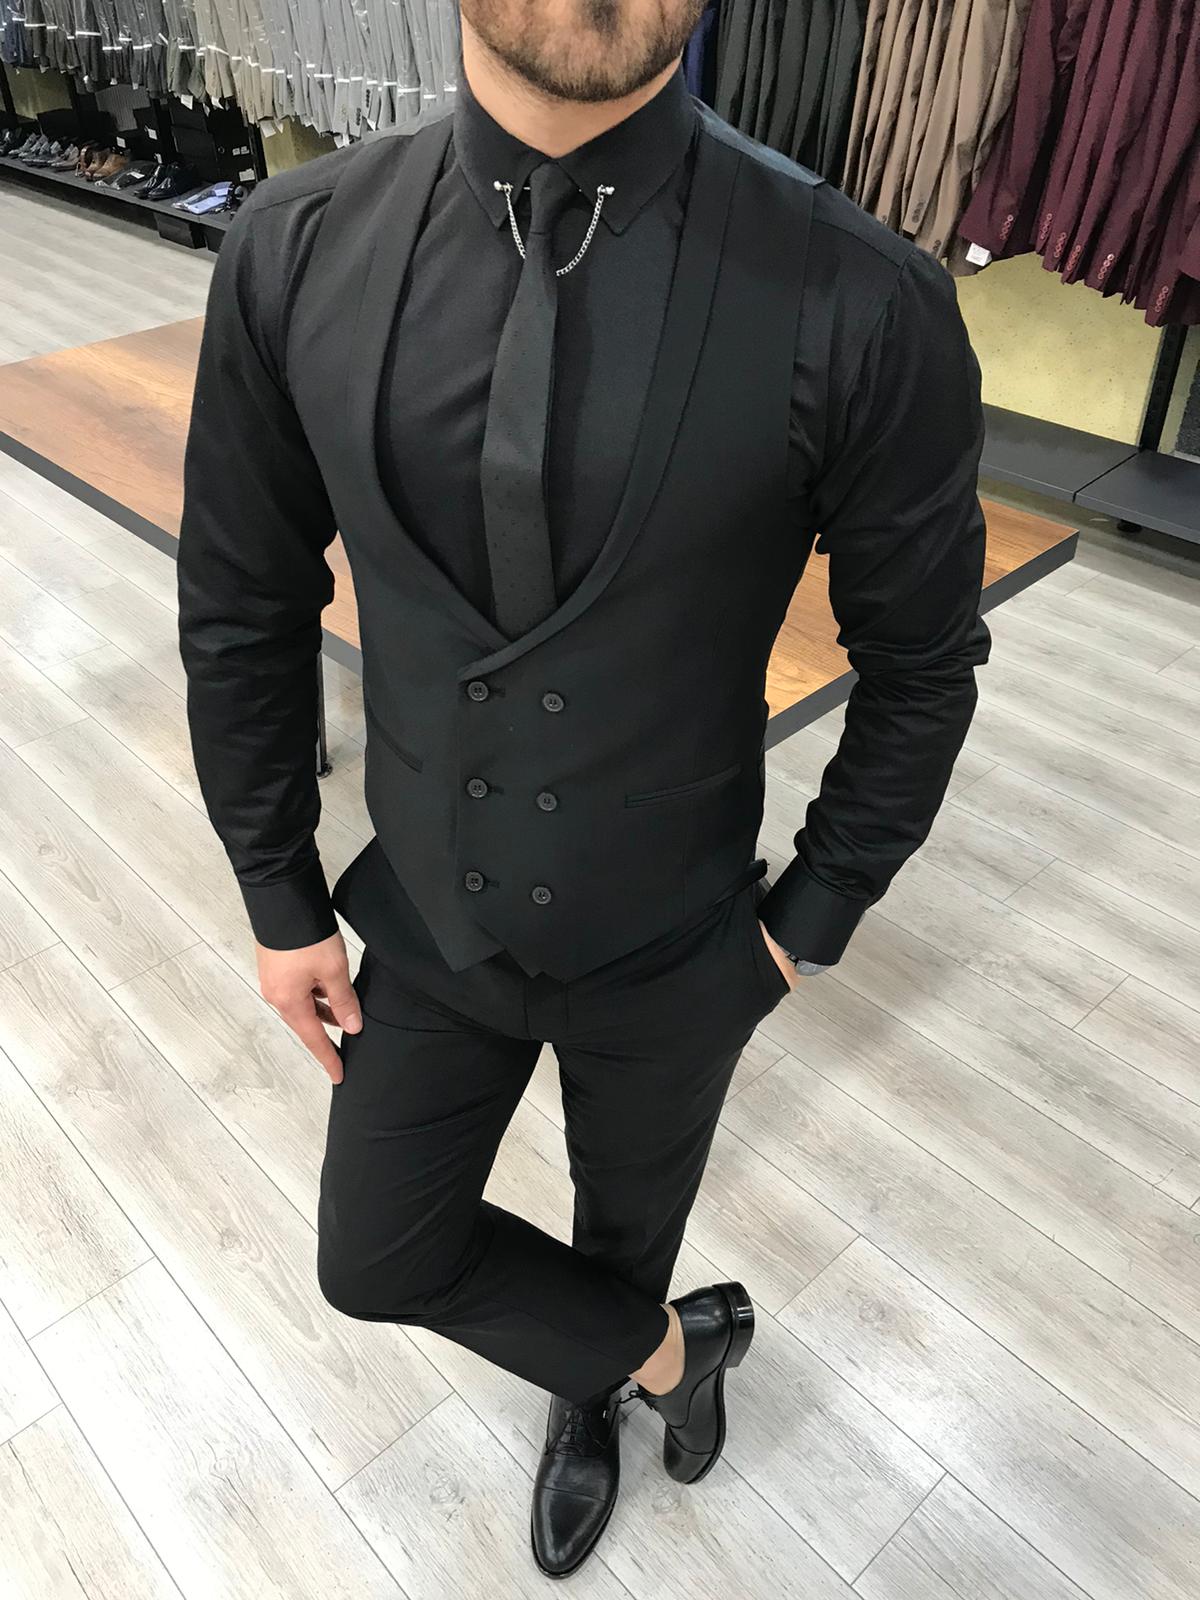 https://gentwith.com/wp-content/uploads/2019/04/Vental-Black-Slim-Fit-Suit-3.jpg